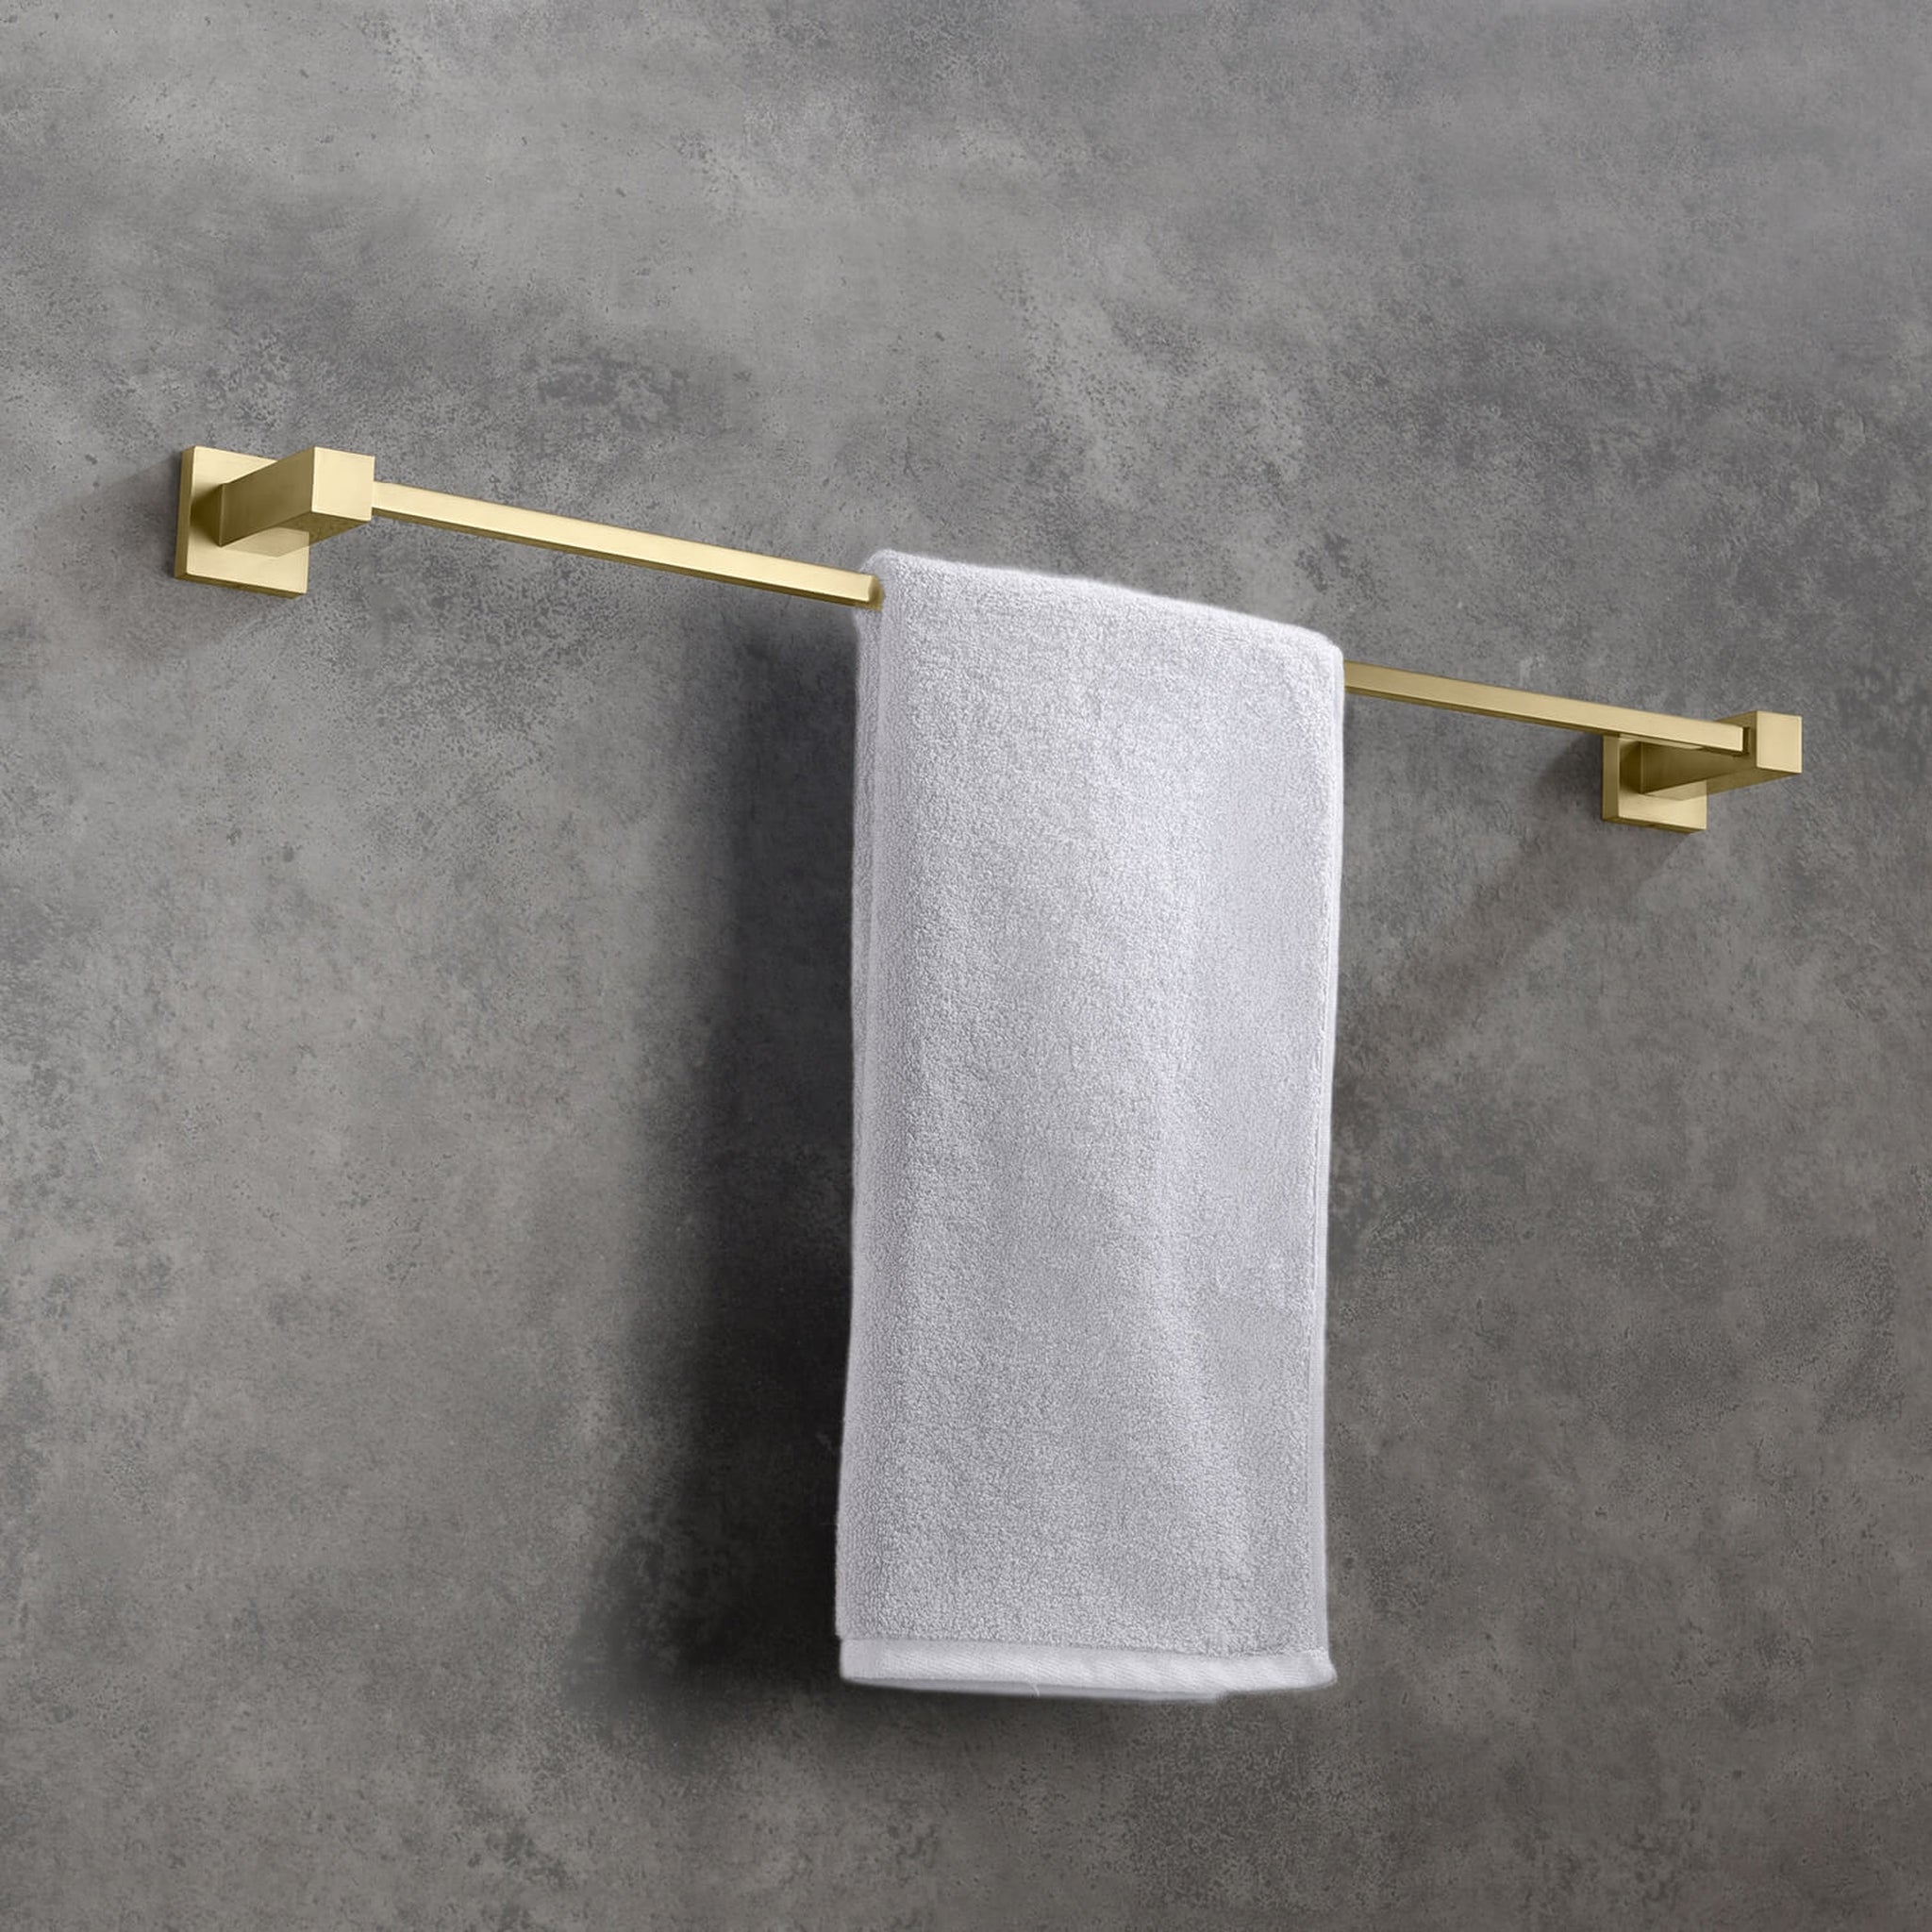 KIBI, KIBI Cube 24" Brass Bathroom Towel Bar in Brushed Gold Finish